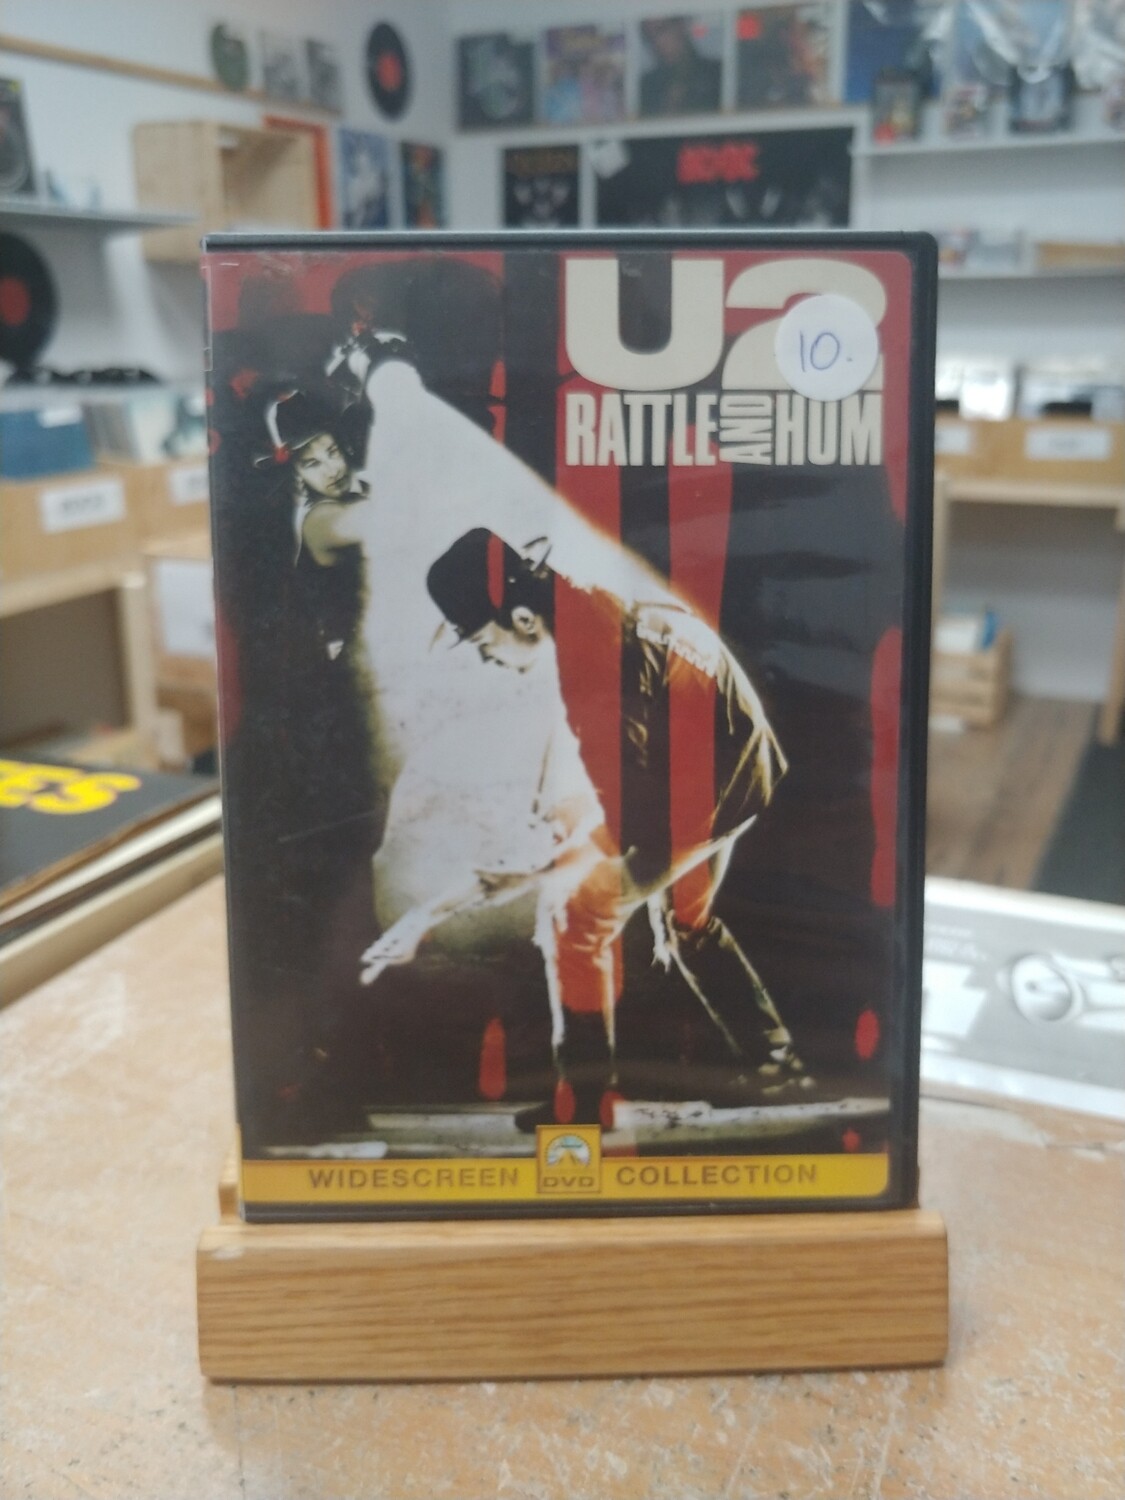 U2 - Rattle and hum (DVD)